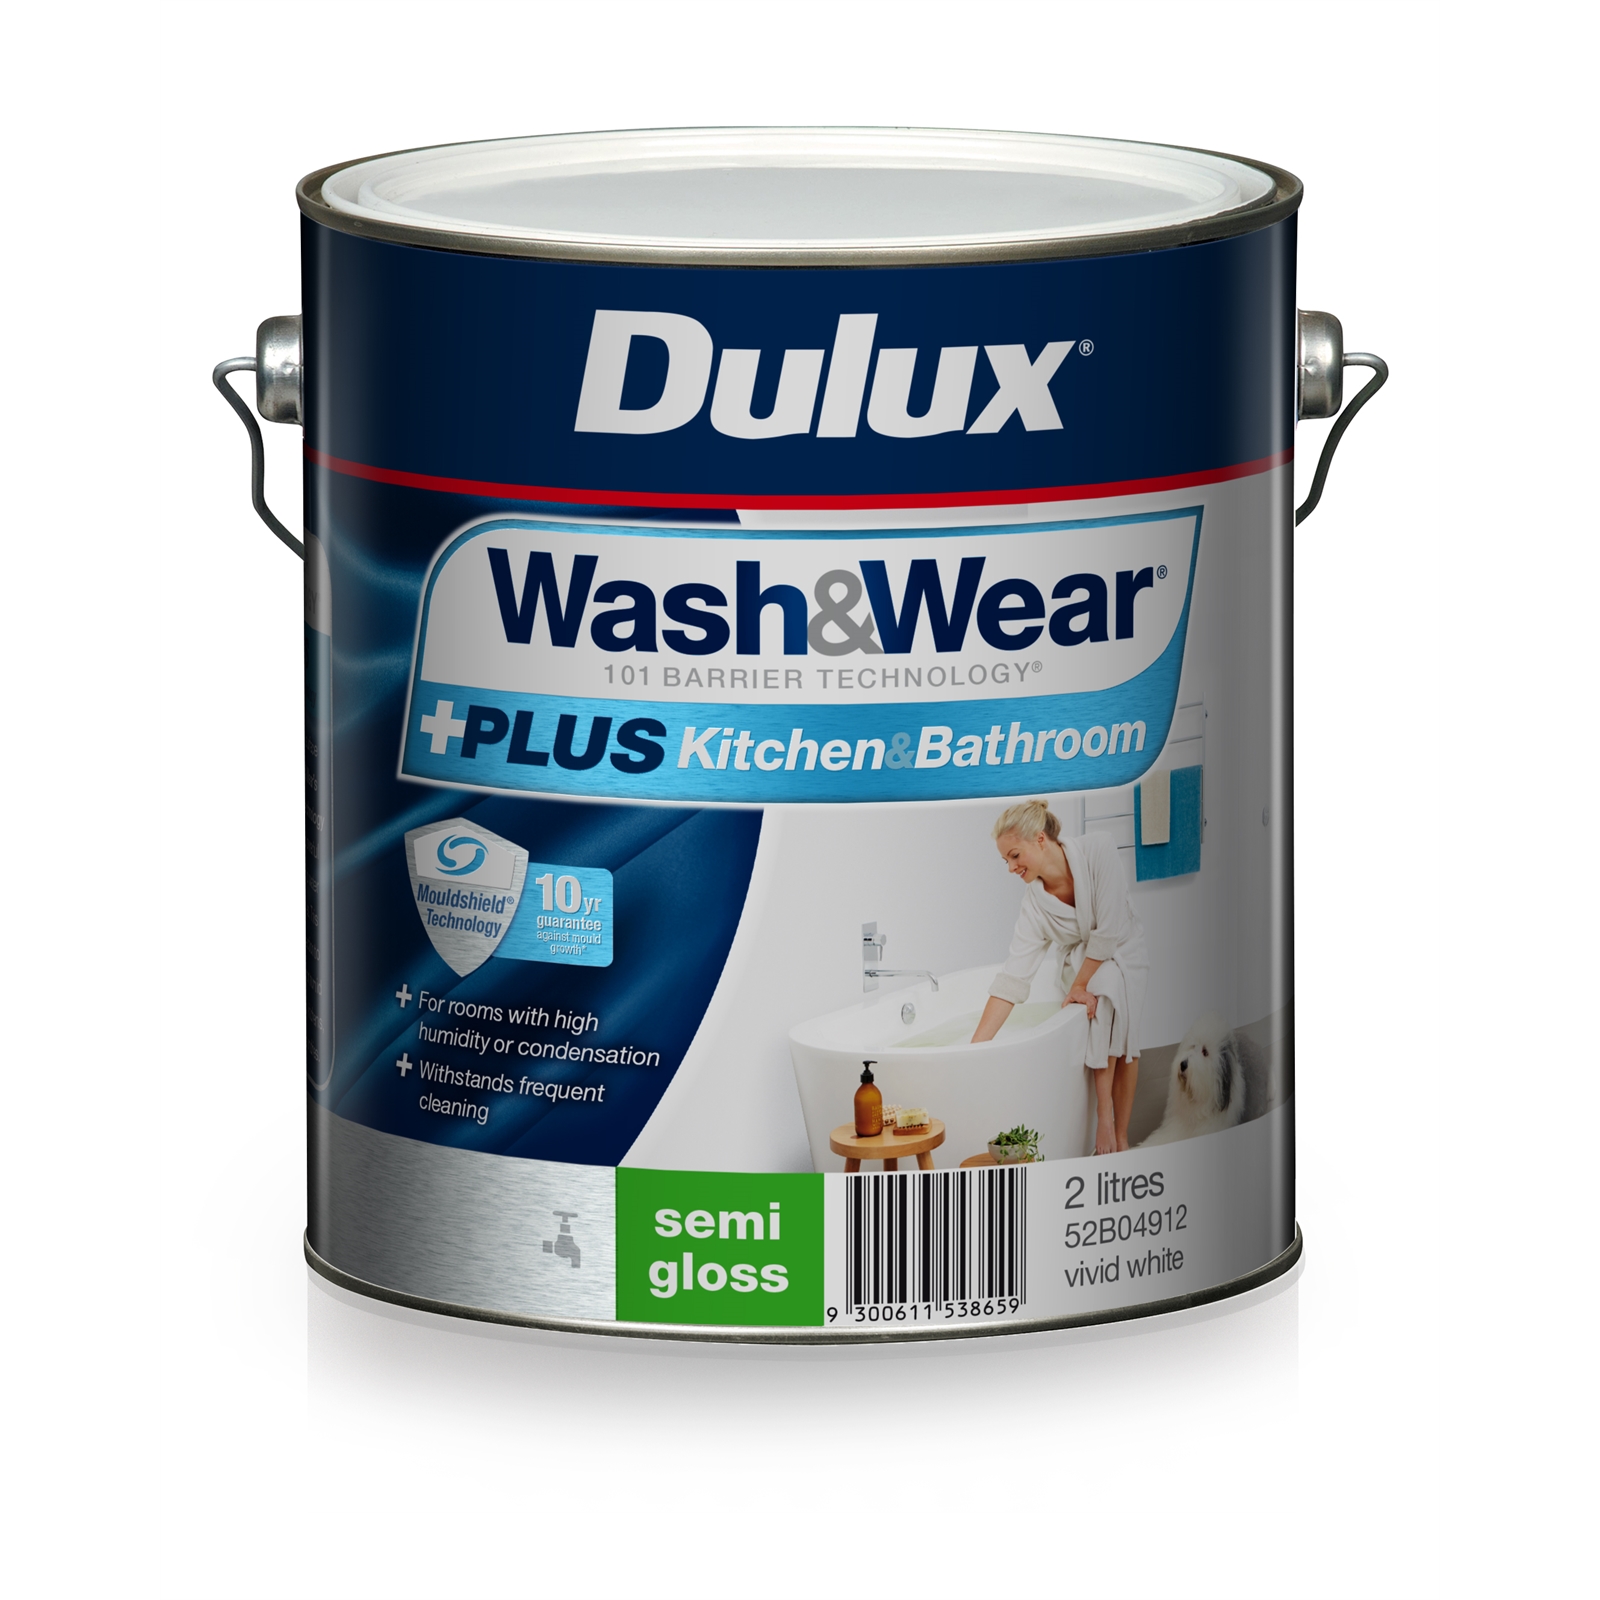 Dulux Wash&Wear 2L +Plus Kitchen & Bathroom Vivid White Semi Gloss Paint